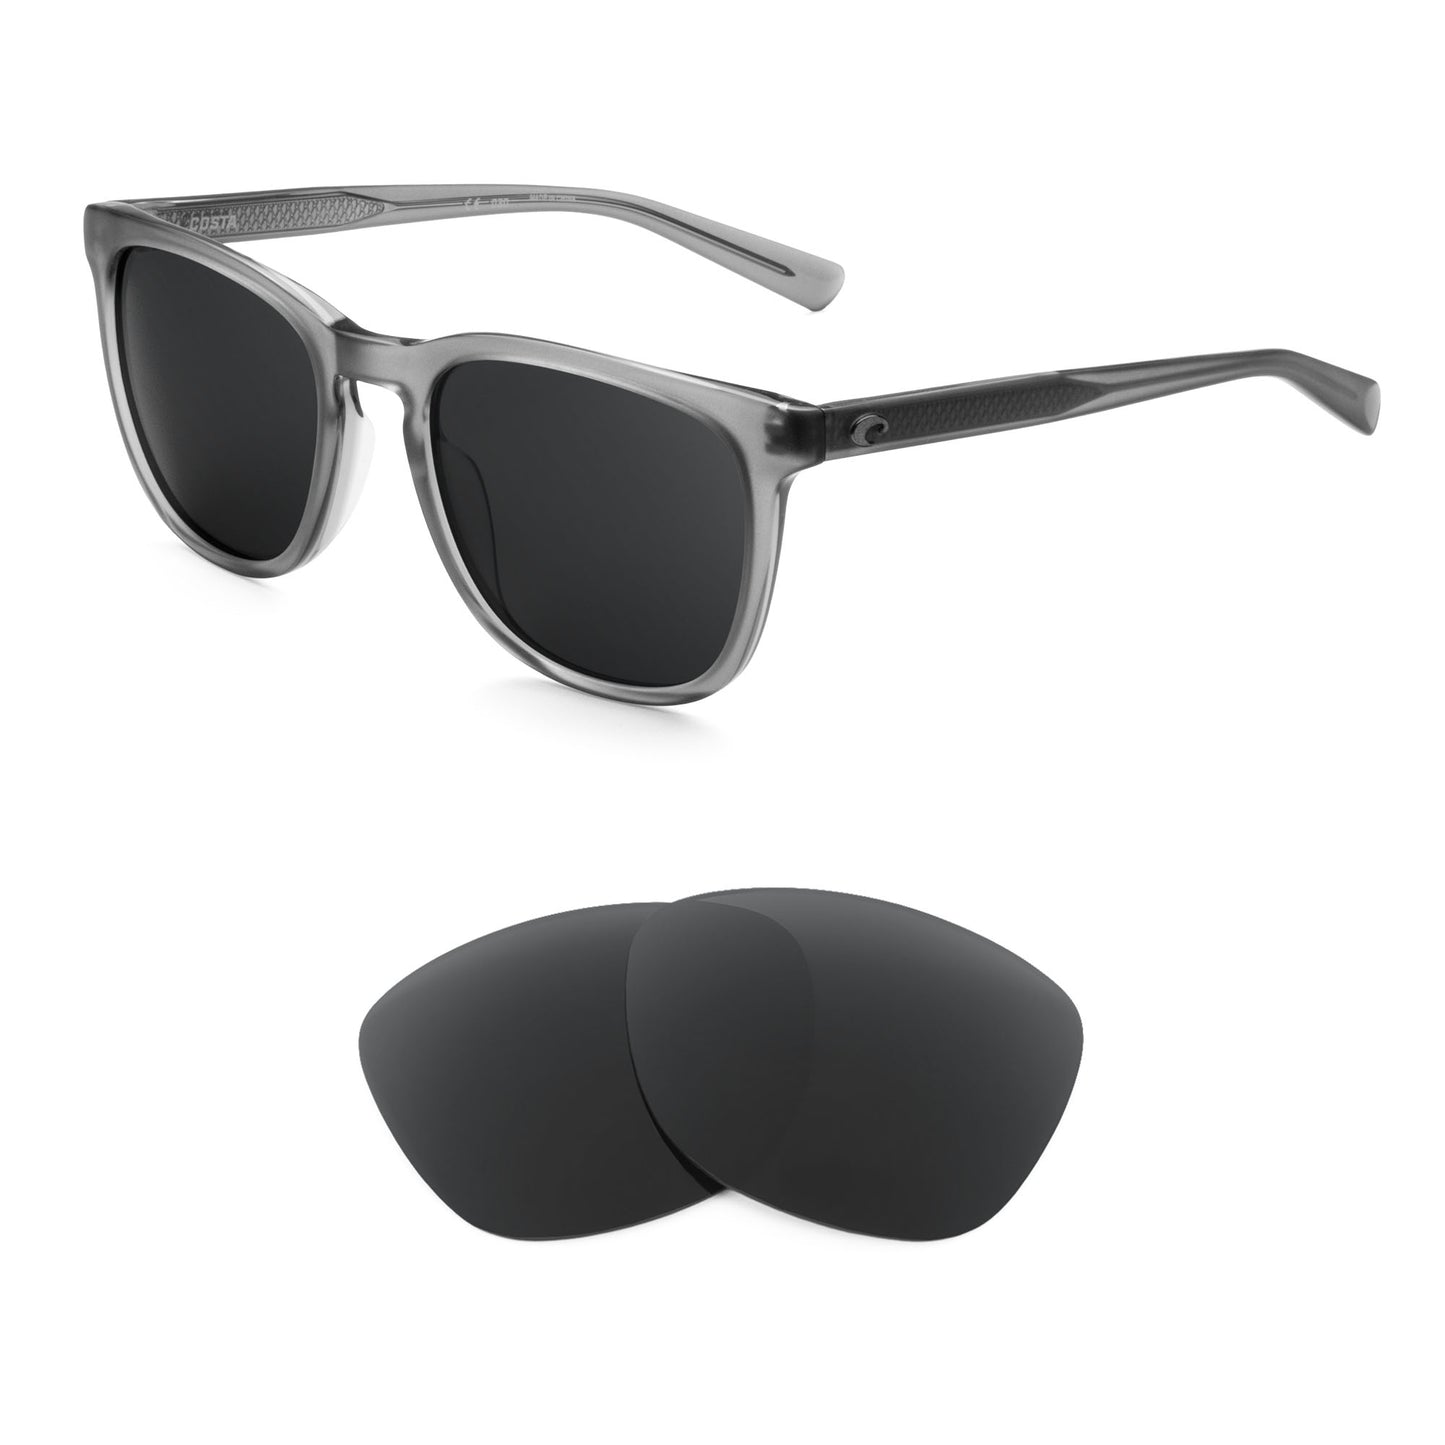 Costa Sullivan sunglasses with replacement lenses